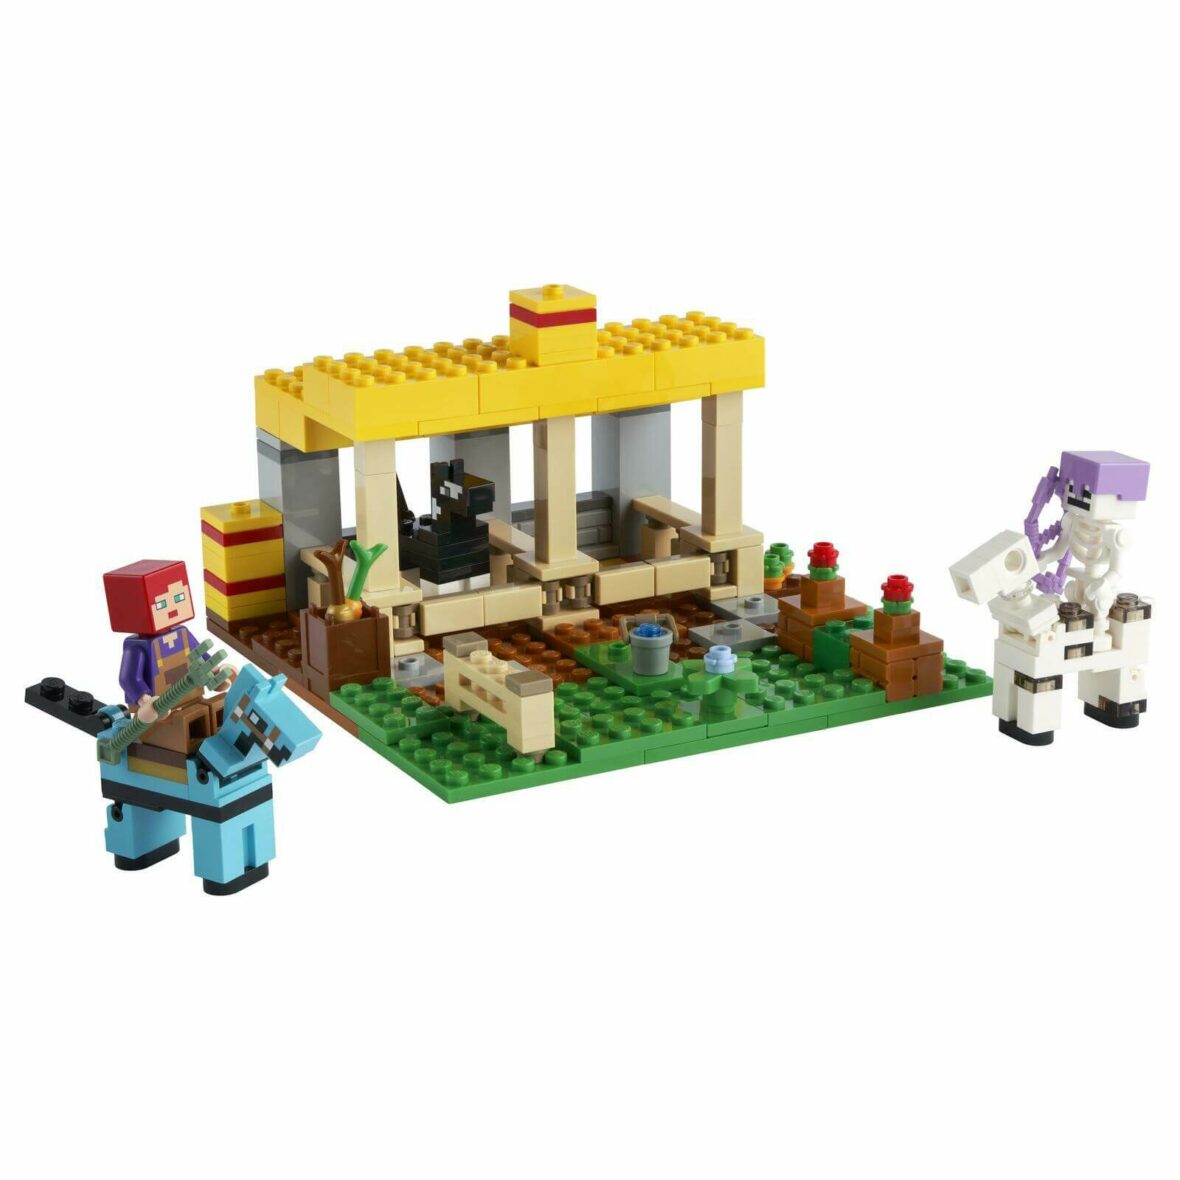 lecurie-jouet-ferme-minecraft-lego-21171_1